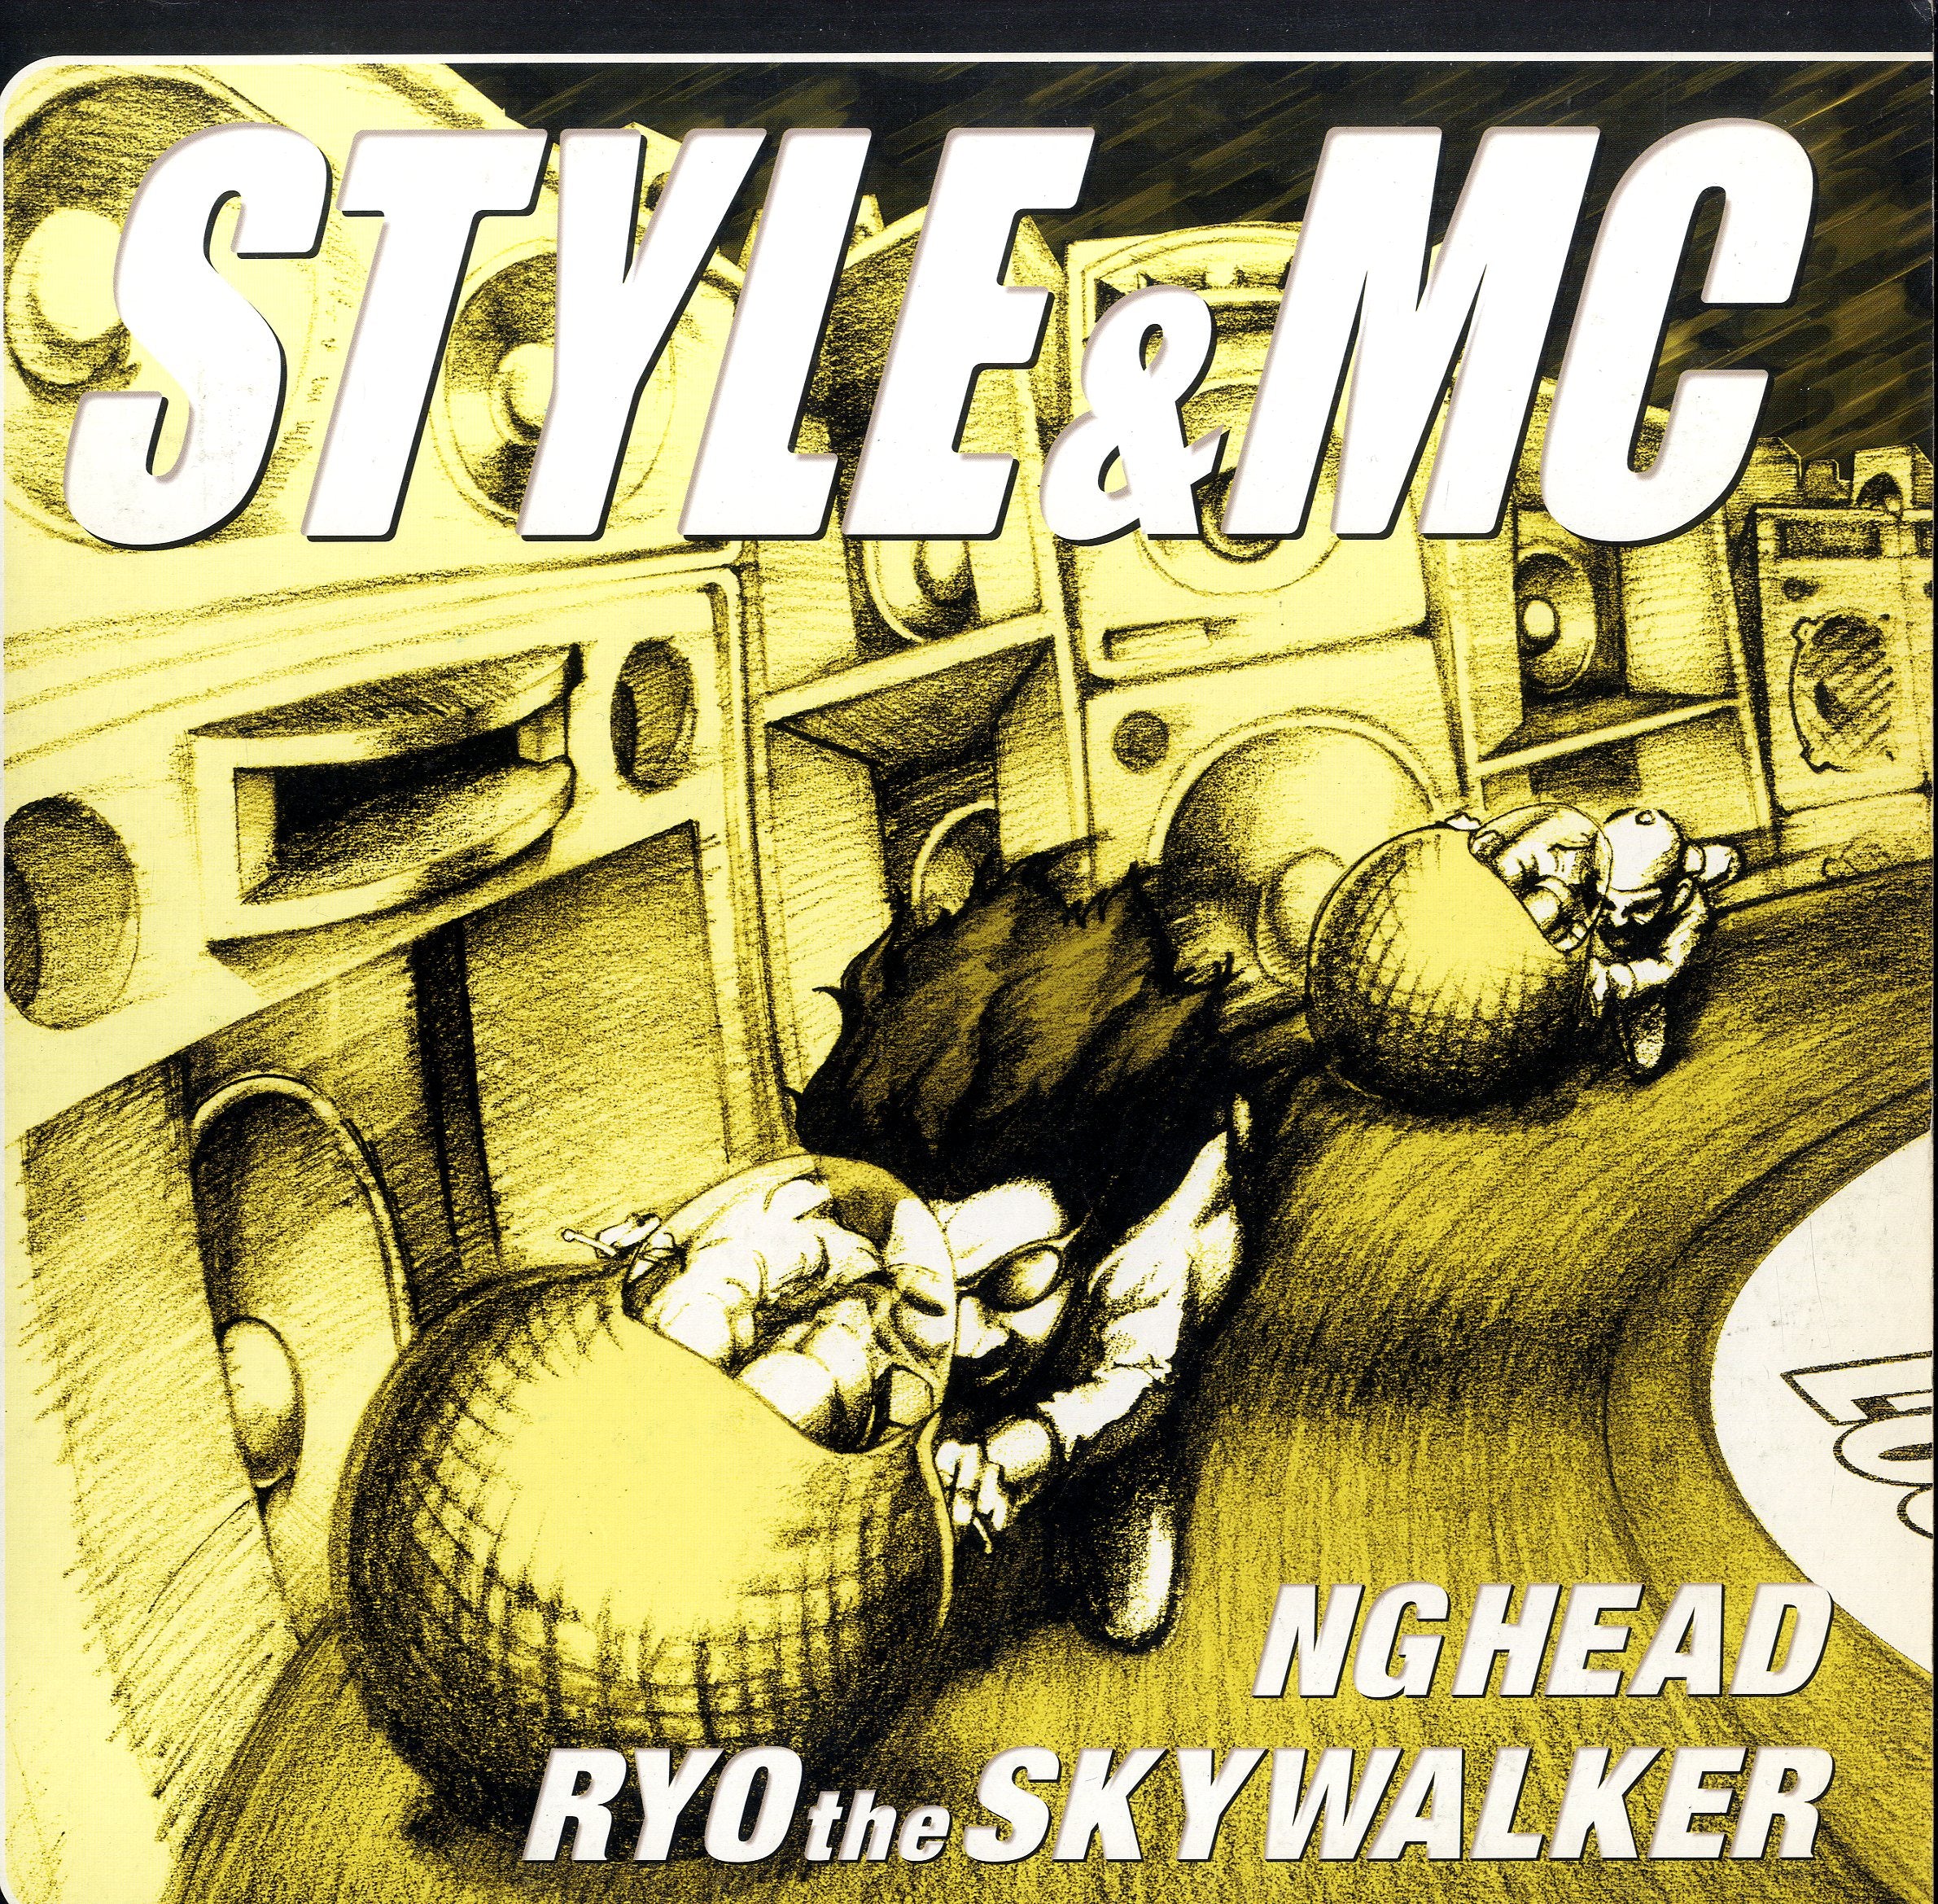 NG HEAD, RYO THE SKYWALKER [Style & Mc]